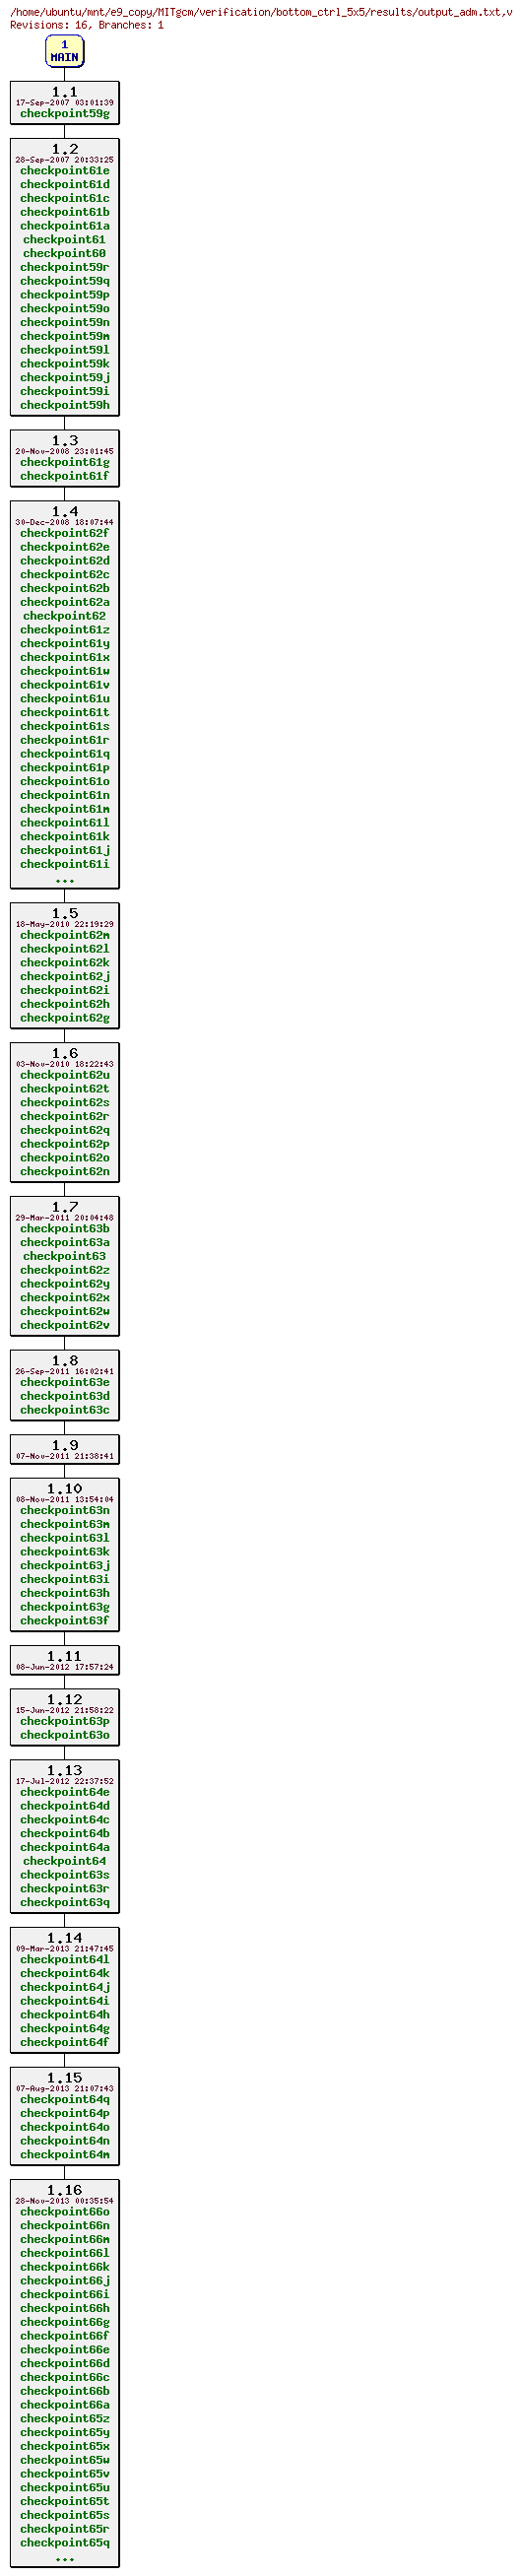 Revisions of MITgcm/verification/bottom_ctrl_5x5/results/output_adm.txt